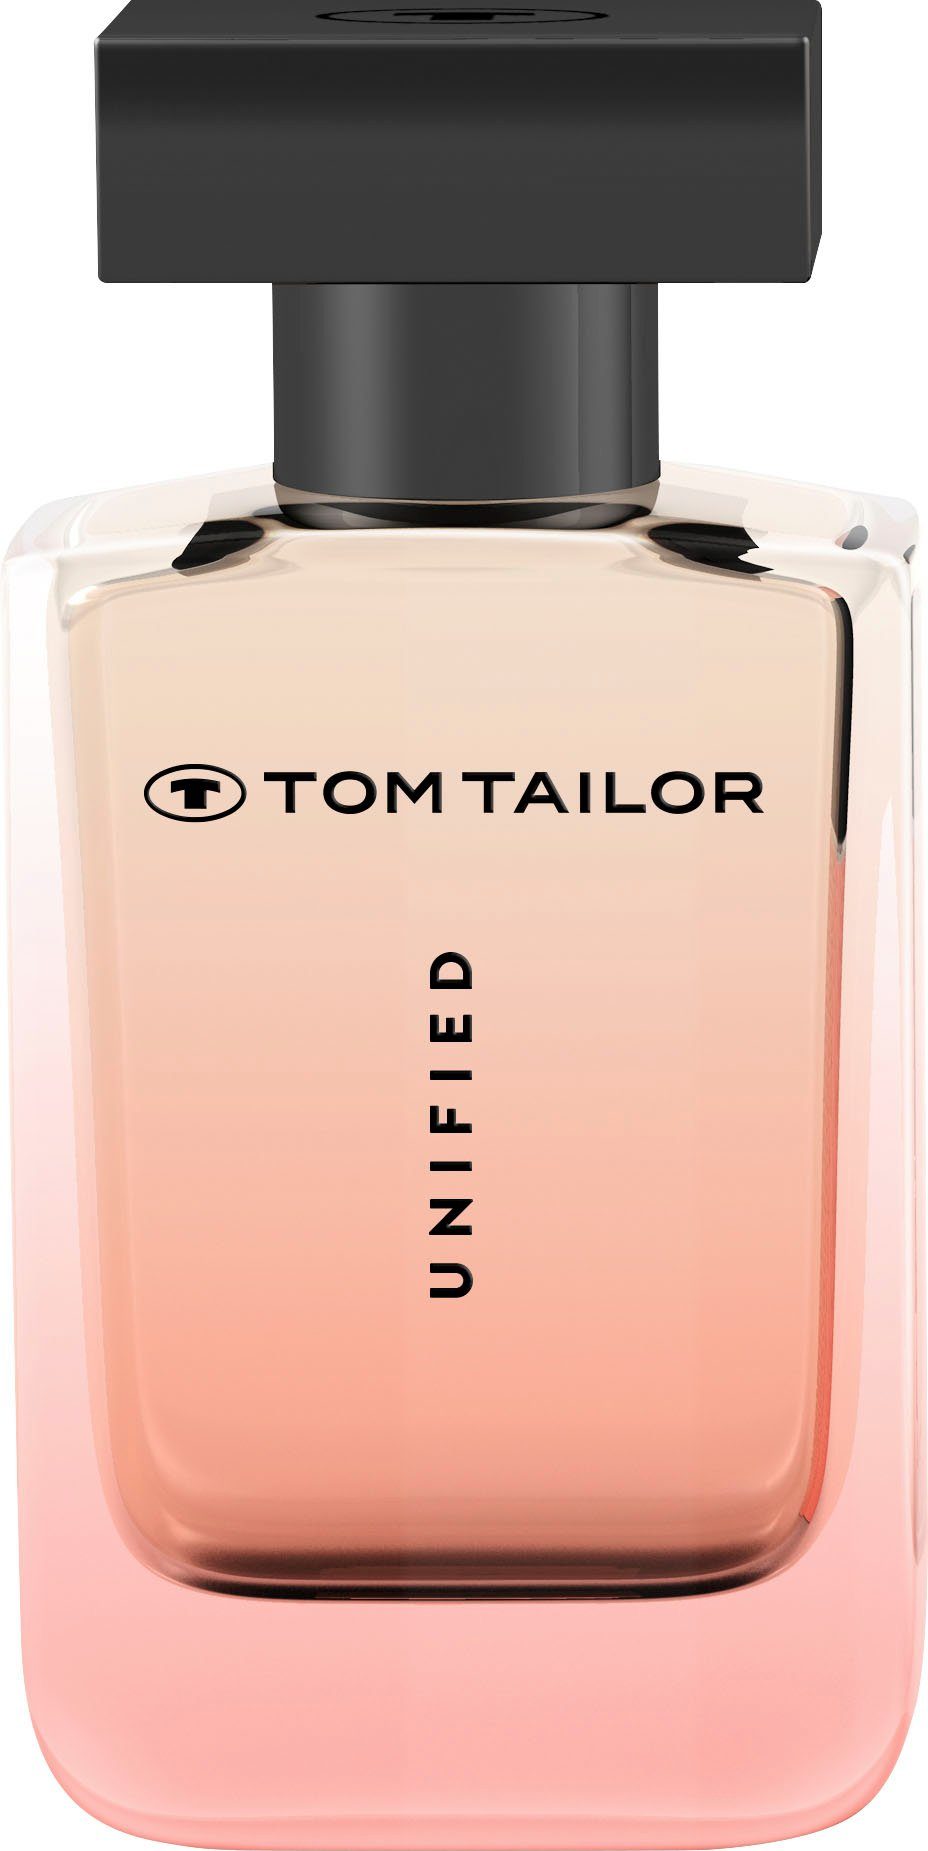 [Das Günstigste aller Zeiten] TOM TAILOR Eau Parfum Woman UNIFIED de